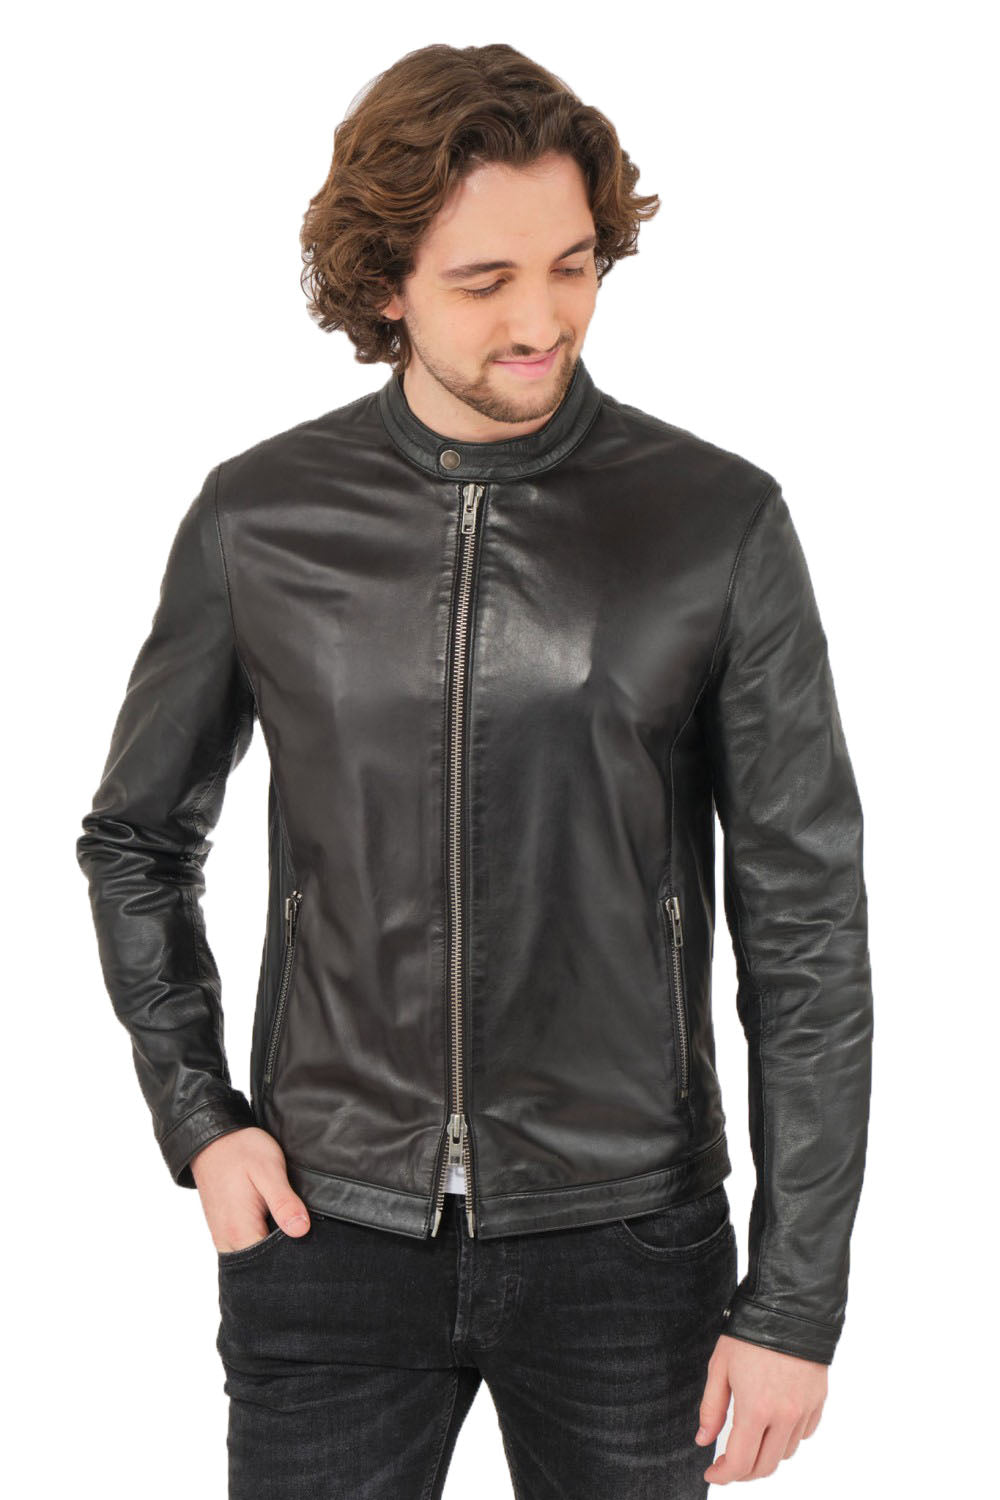 Men Genuine Leather Jacket MJ115 freeshipping - SkinOutfit